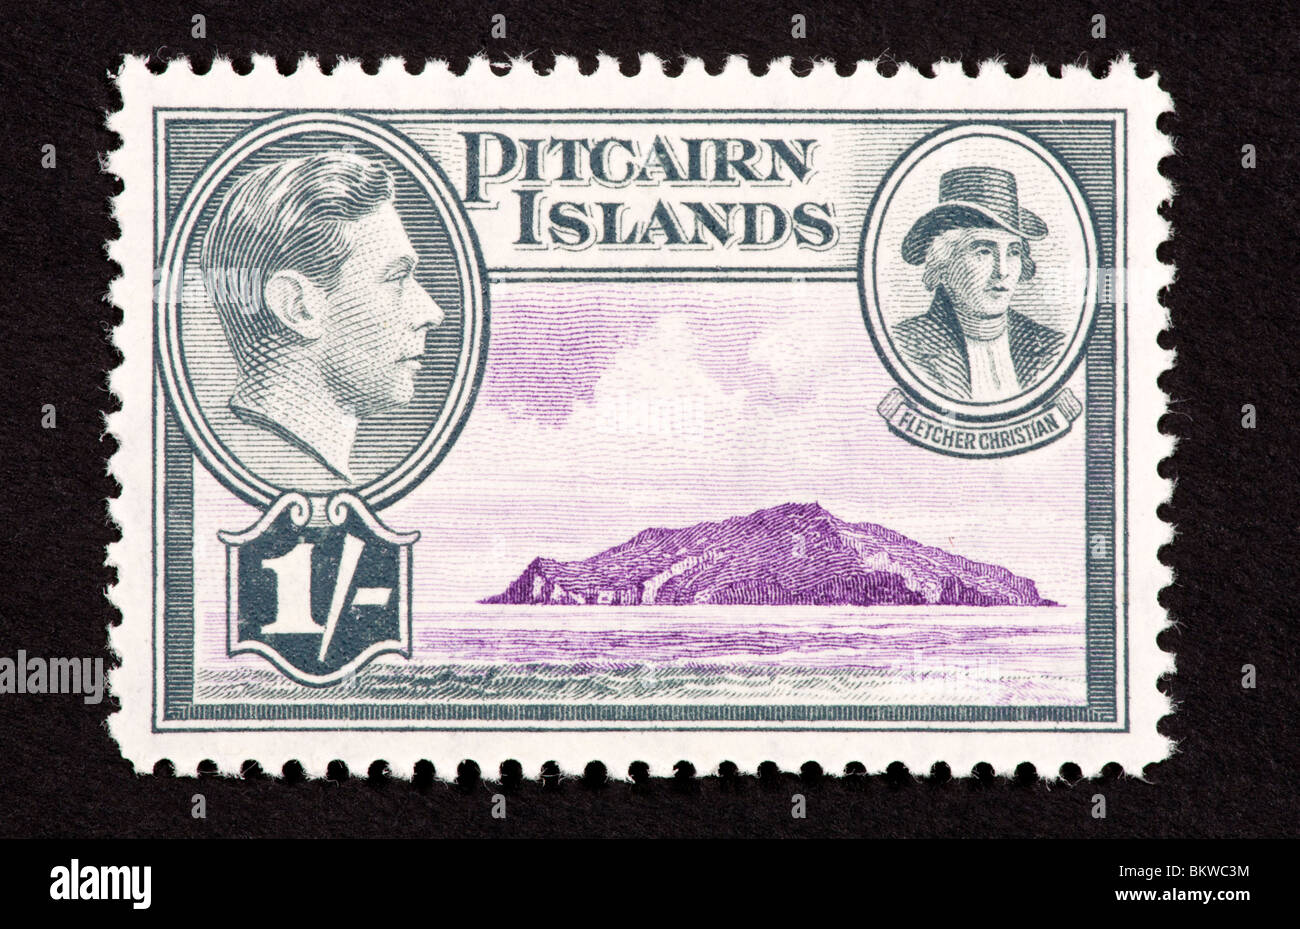 Francobollo dalle Isole Pitcairn raffiguranti Isola Pitcairn, George Fletcher e George VI. Foto Stock